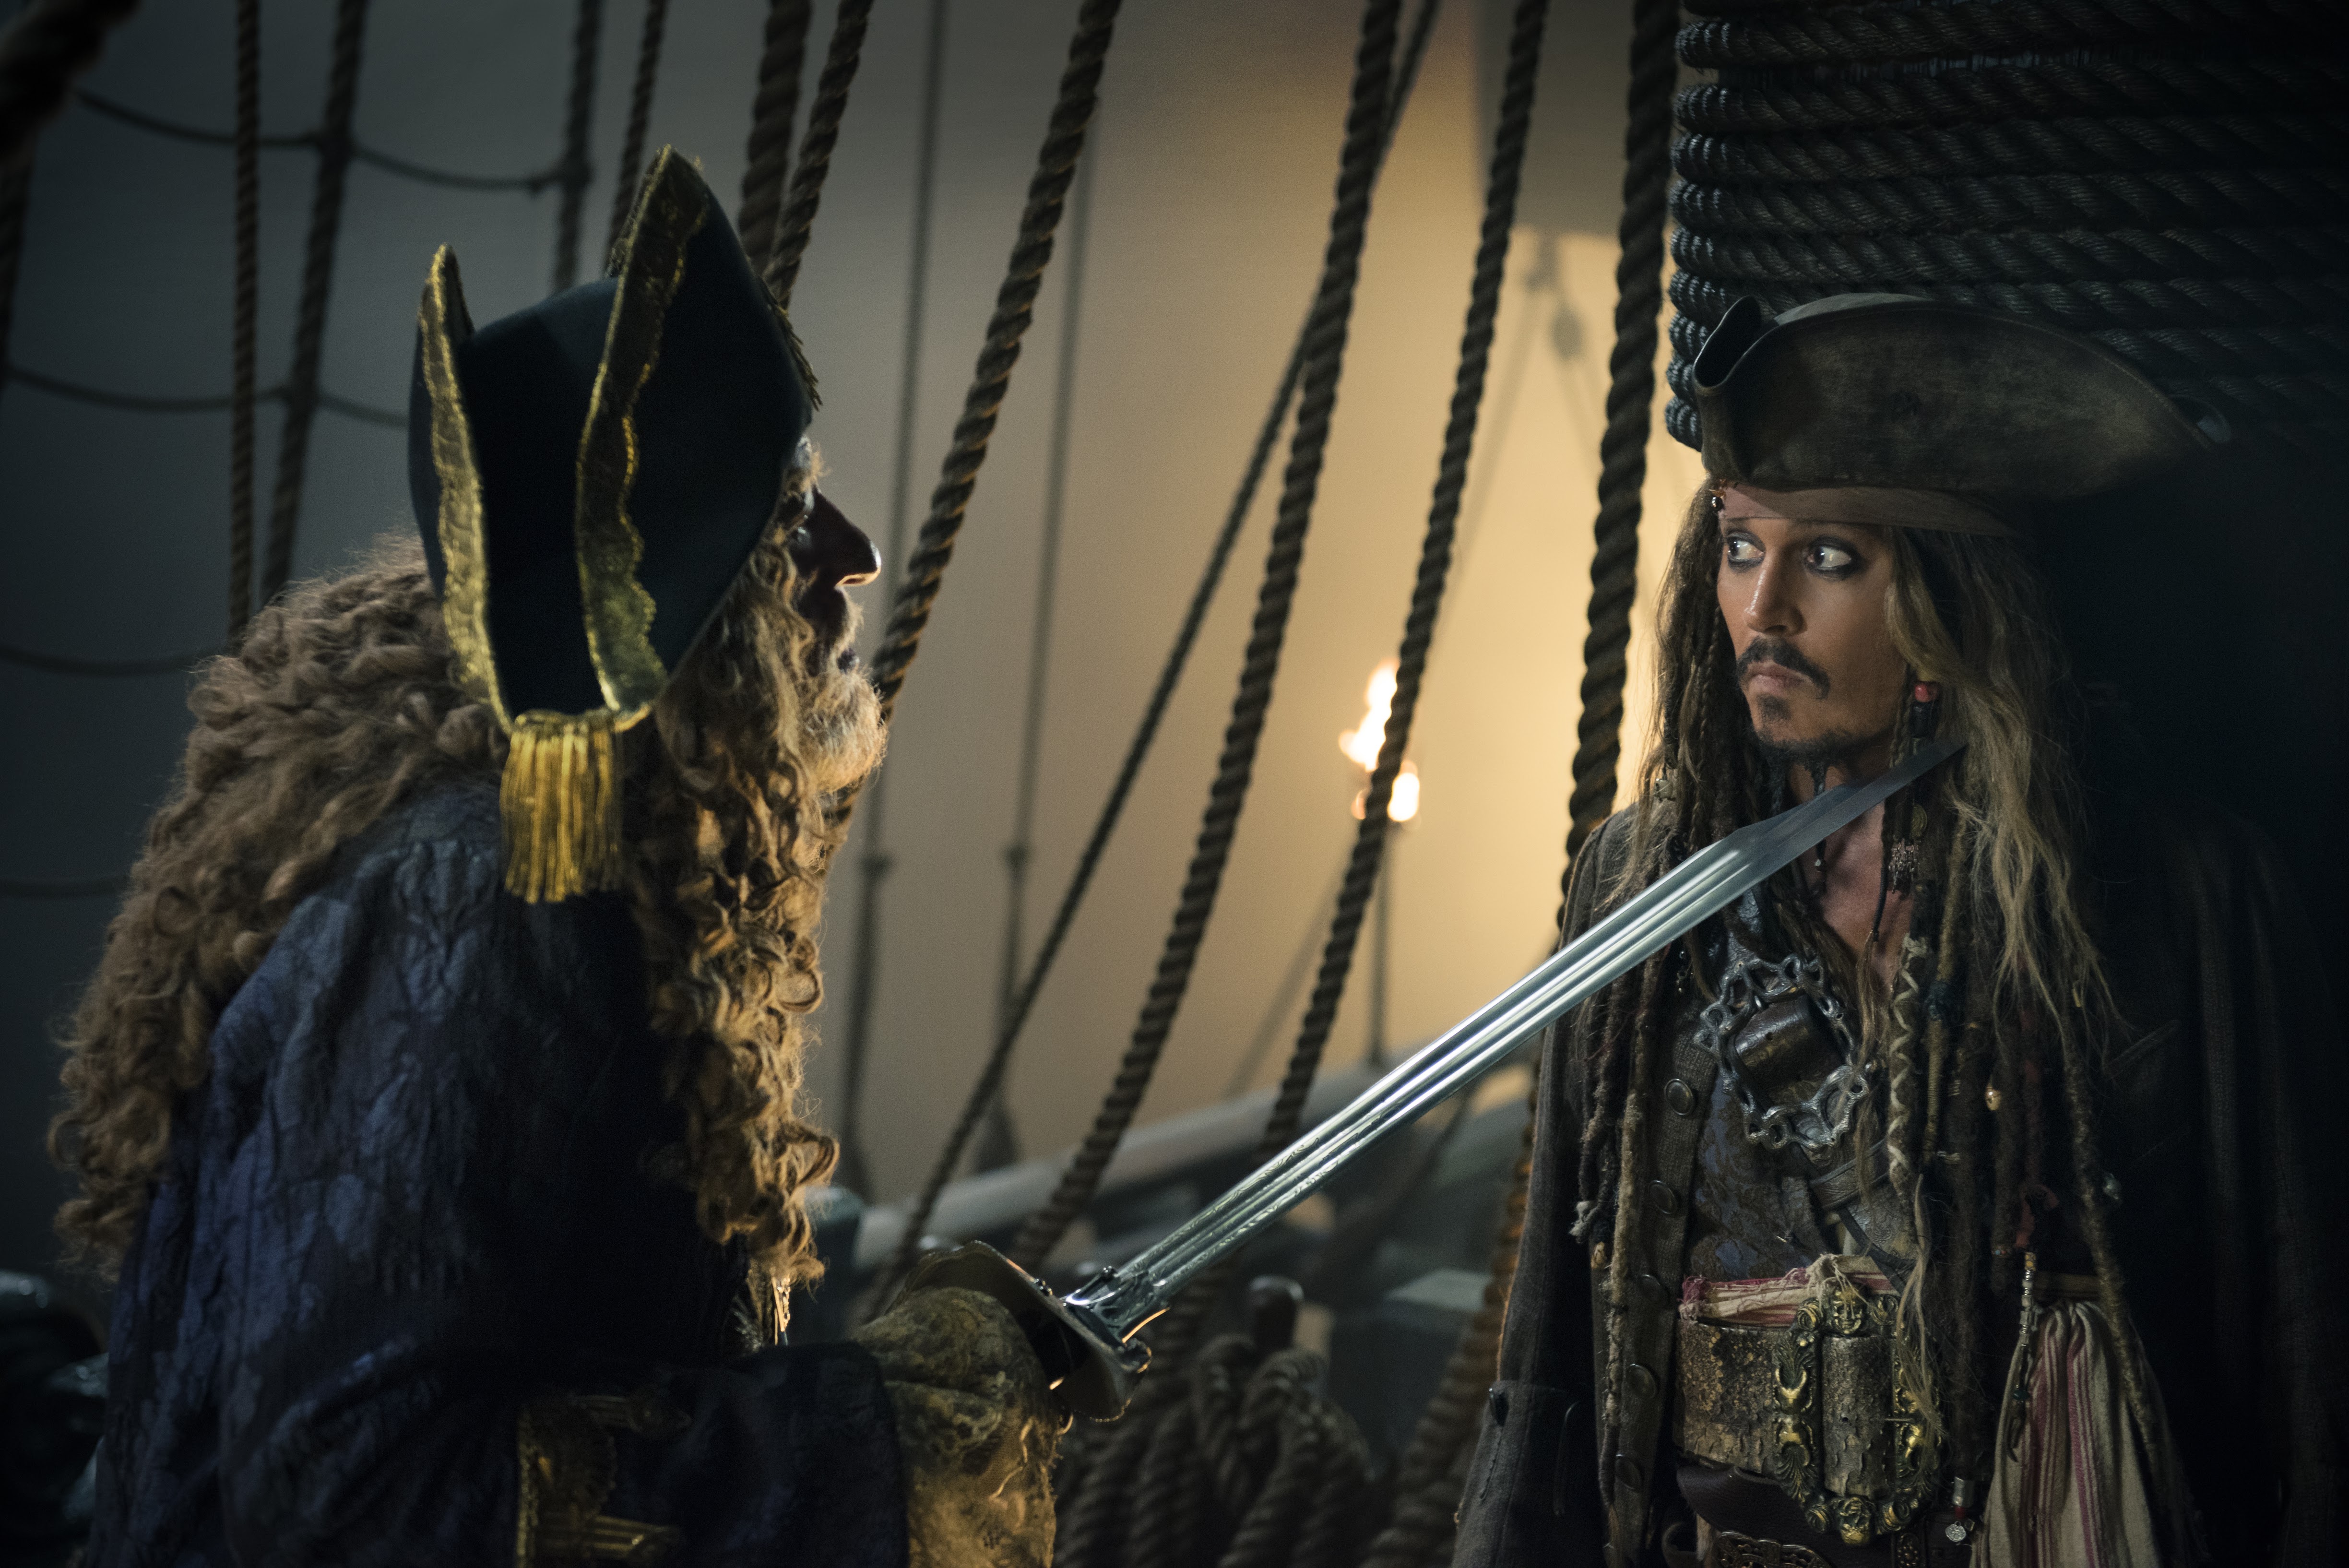 2cellos Perform The Pirates Of The Caribbean Theme By Hans Zimmer 2cellos が 海賊が出現した16世紀当時の古典的な船を再現したカラカ船上で勇壮に奏でた パイレーツ オブ ザ カリビアン のテーマ Cia Movie News